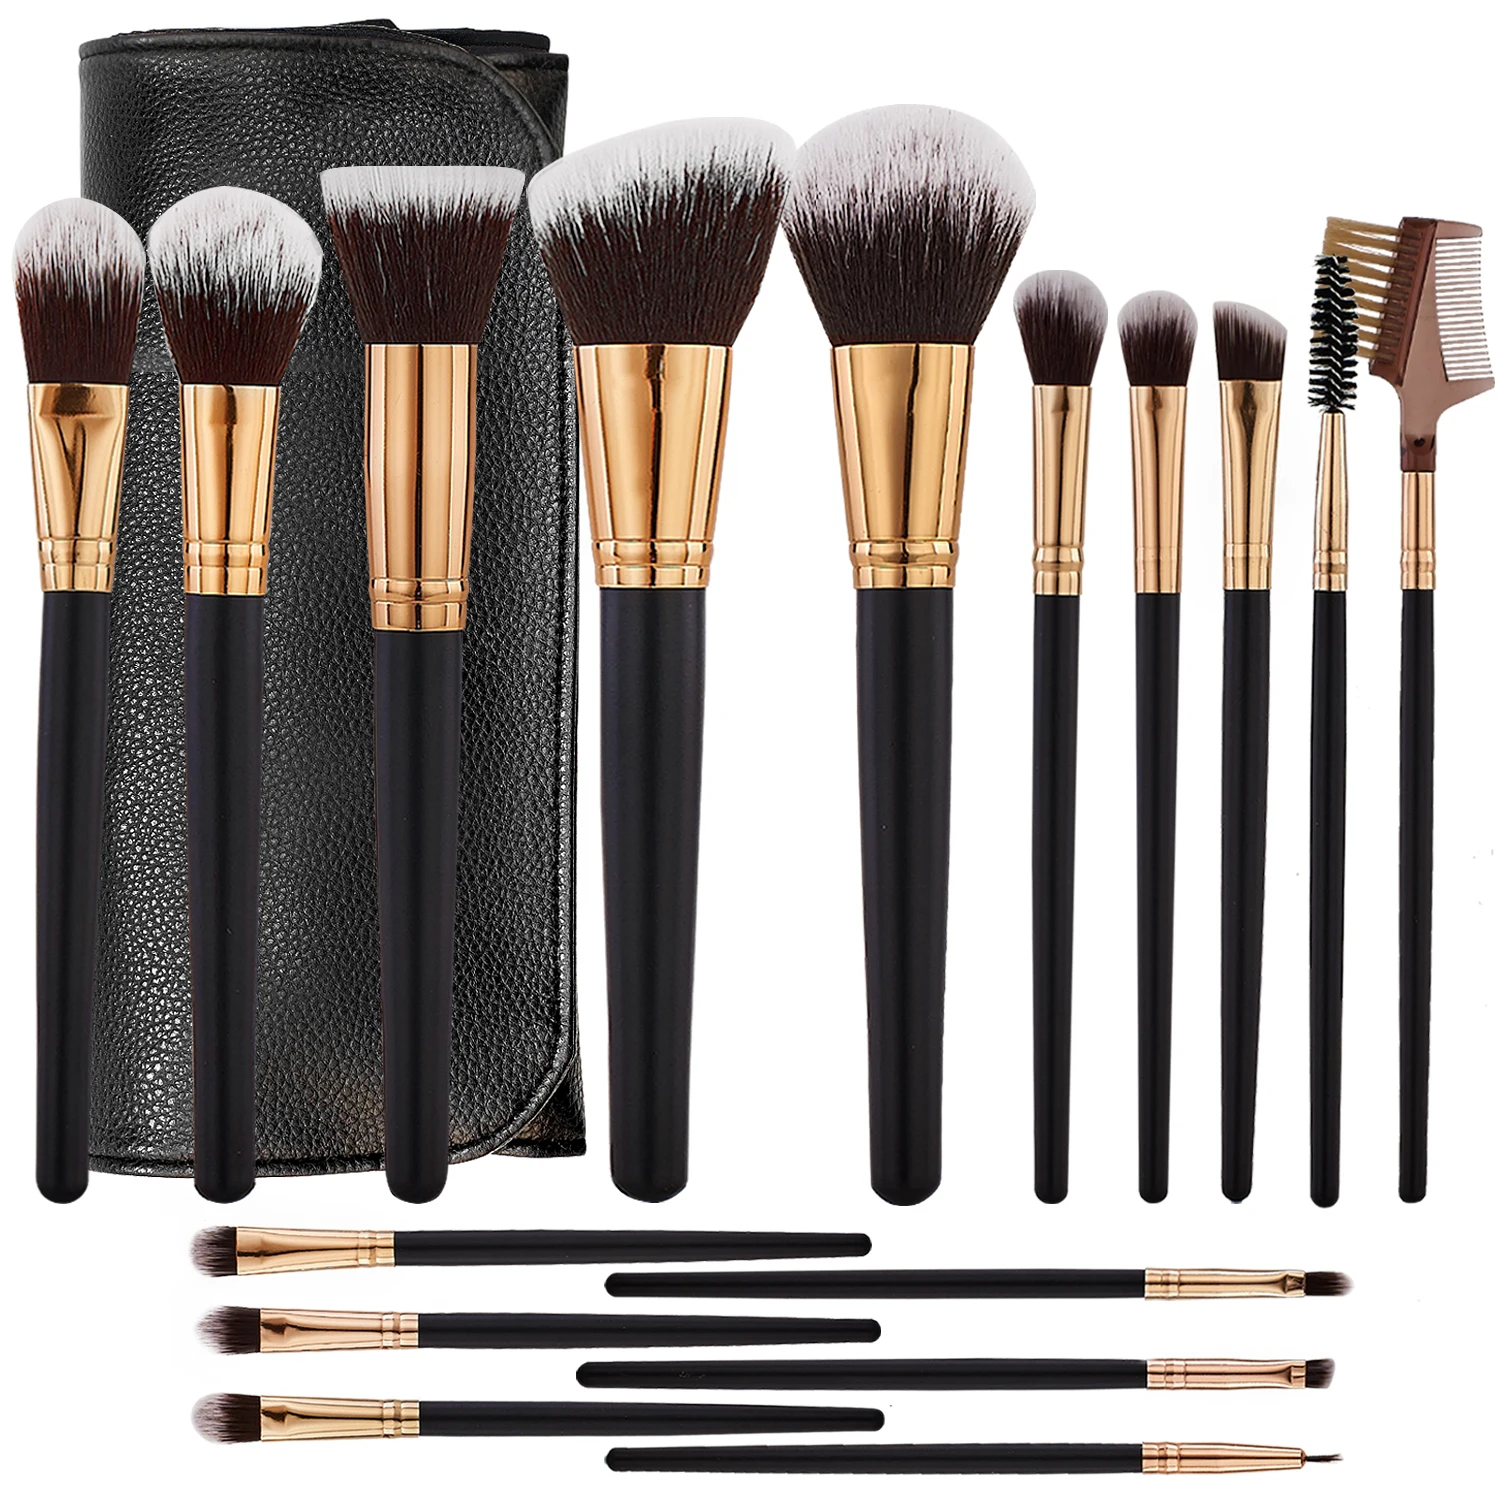 

RONSLORE 16pcs Makeup Brush Set Premium Beauty Cosmetic Powder Foundation Makeup Brushes Eyeshadow Fan Kabuki Brush Kit